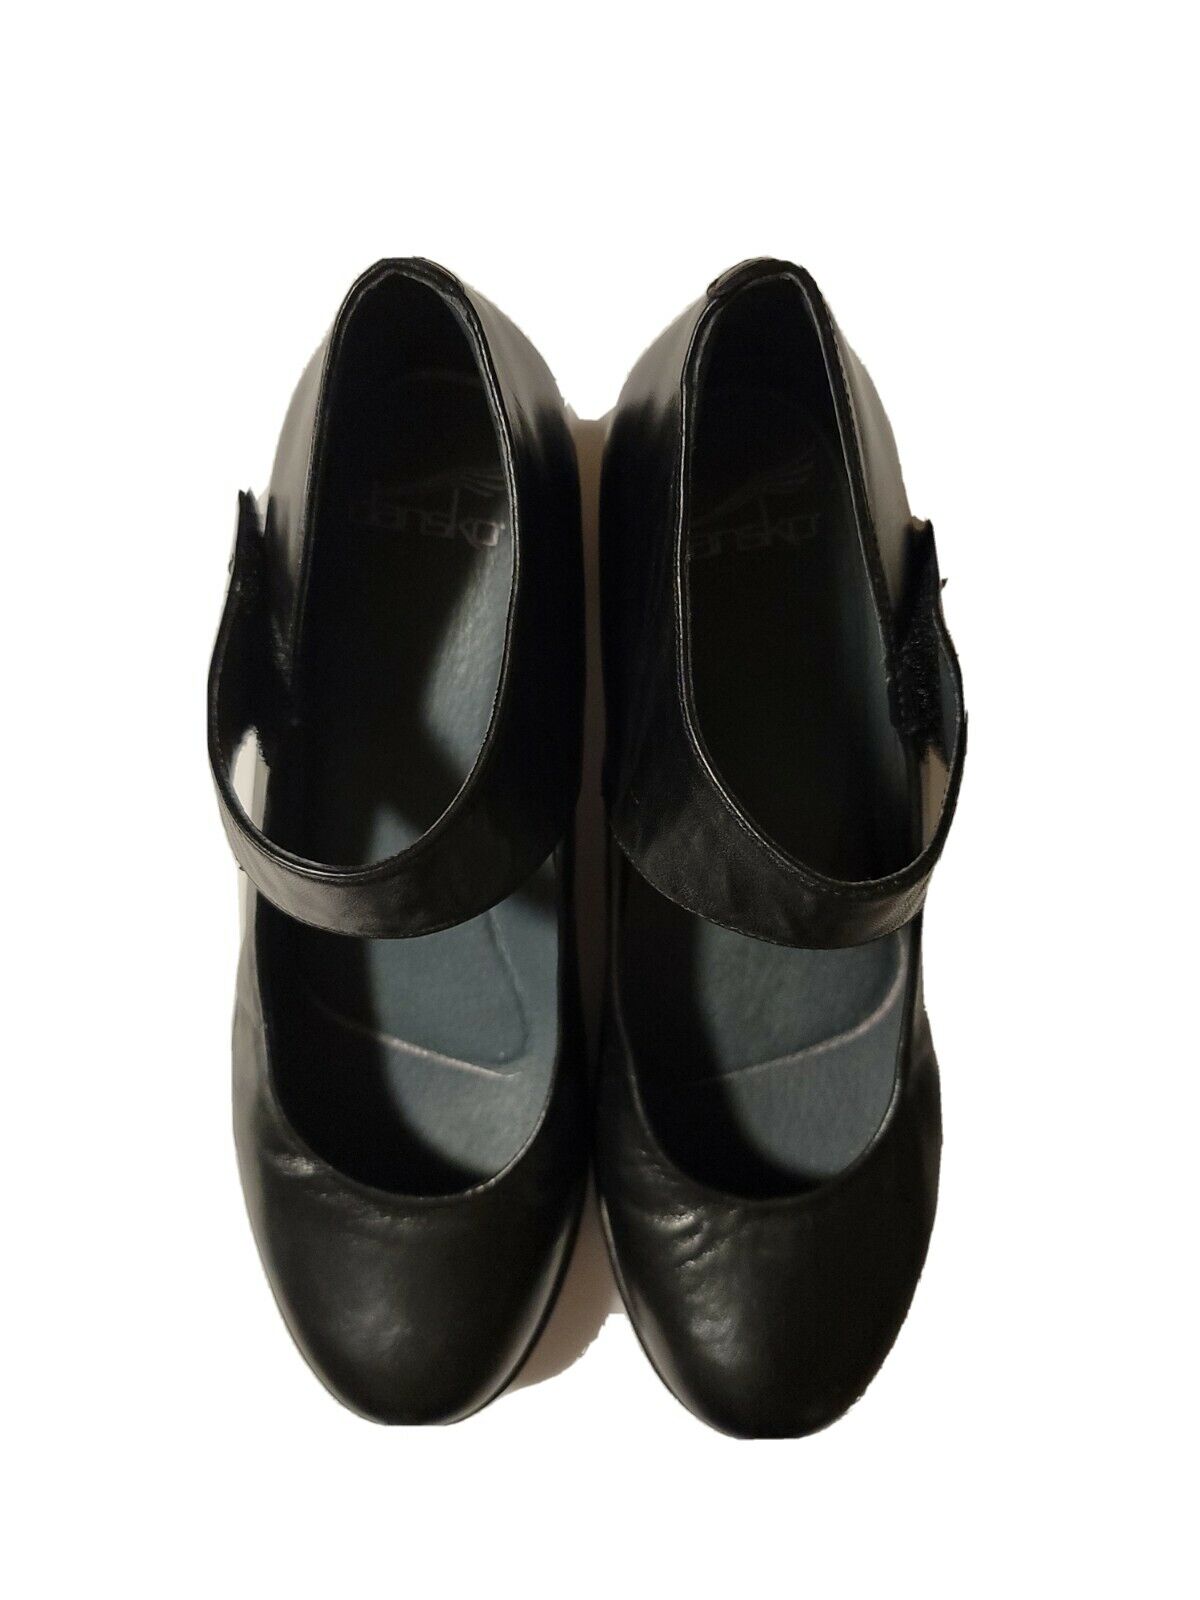 Dansko Women's Bess Mary Jane Black Leather Dress Pump Heel Clog Shoes Size 39